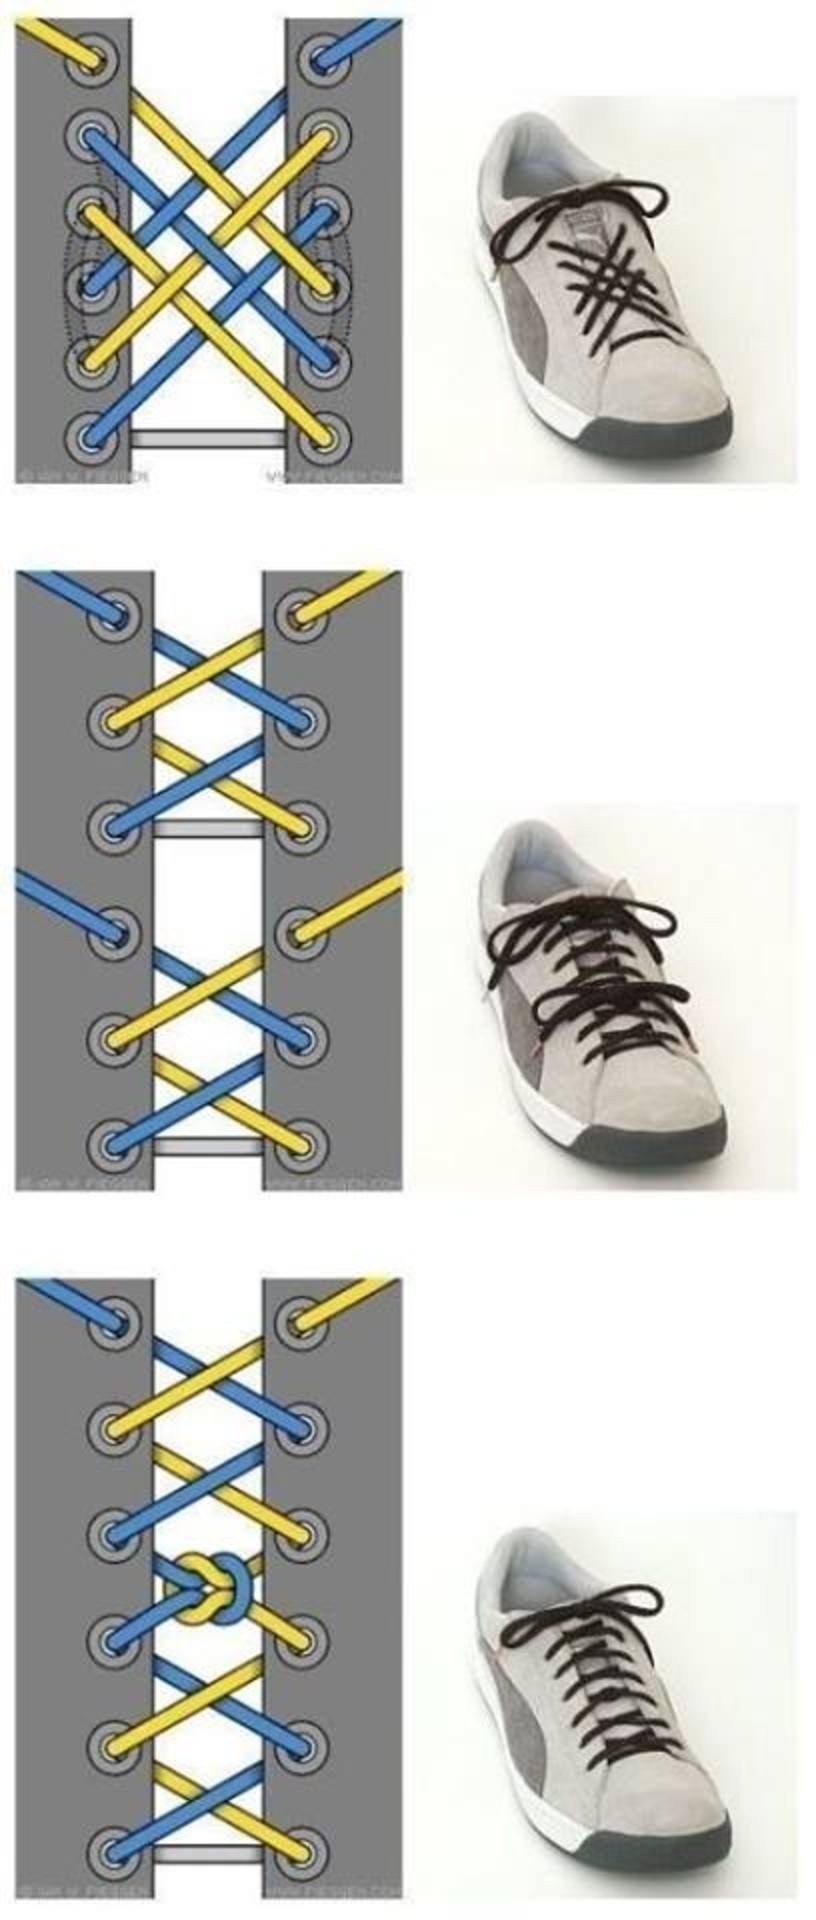 Шнуровка на 4. Типы шнурования шнурков на 5 дырок. Шнурки зашнуровать 5 дырок. Способы зашнуровать кроссовки 5 дырок. Шнурование молния 5 дырок.